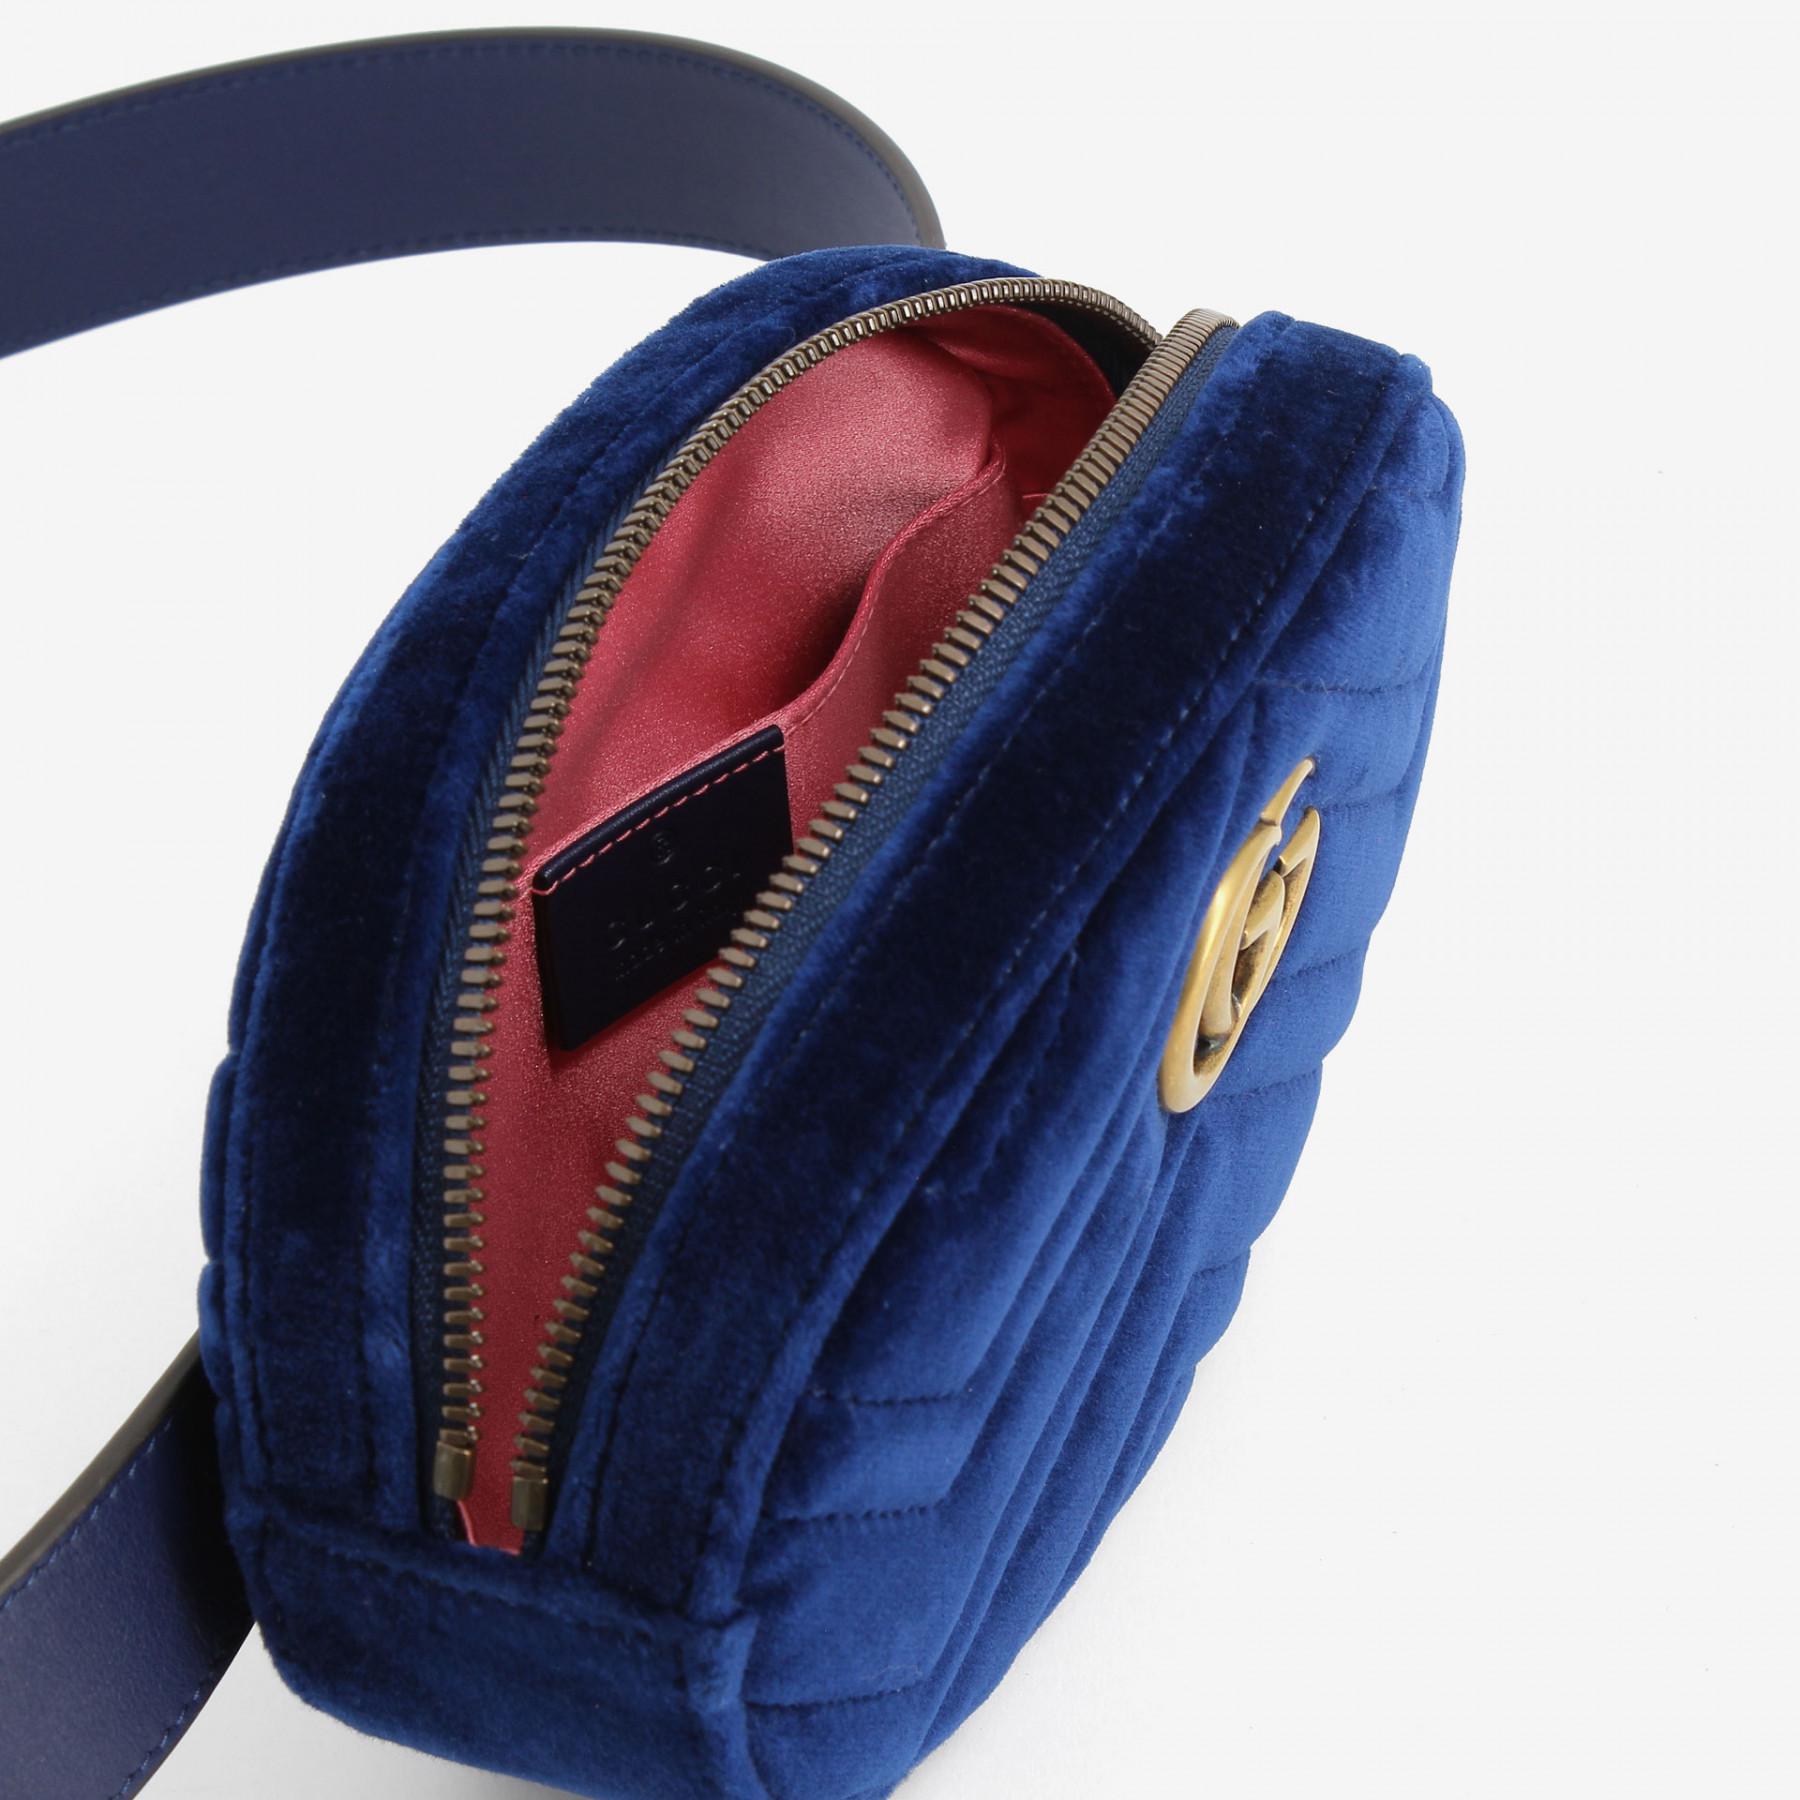 Gucci Velvet Marmont Belt Bag in Blue - Lyst